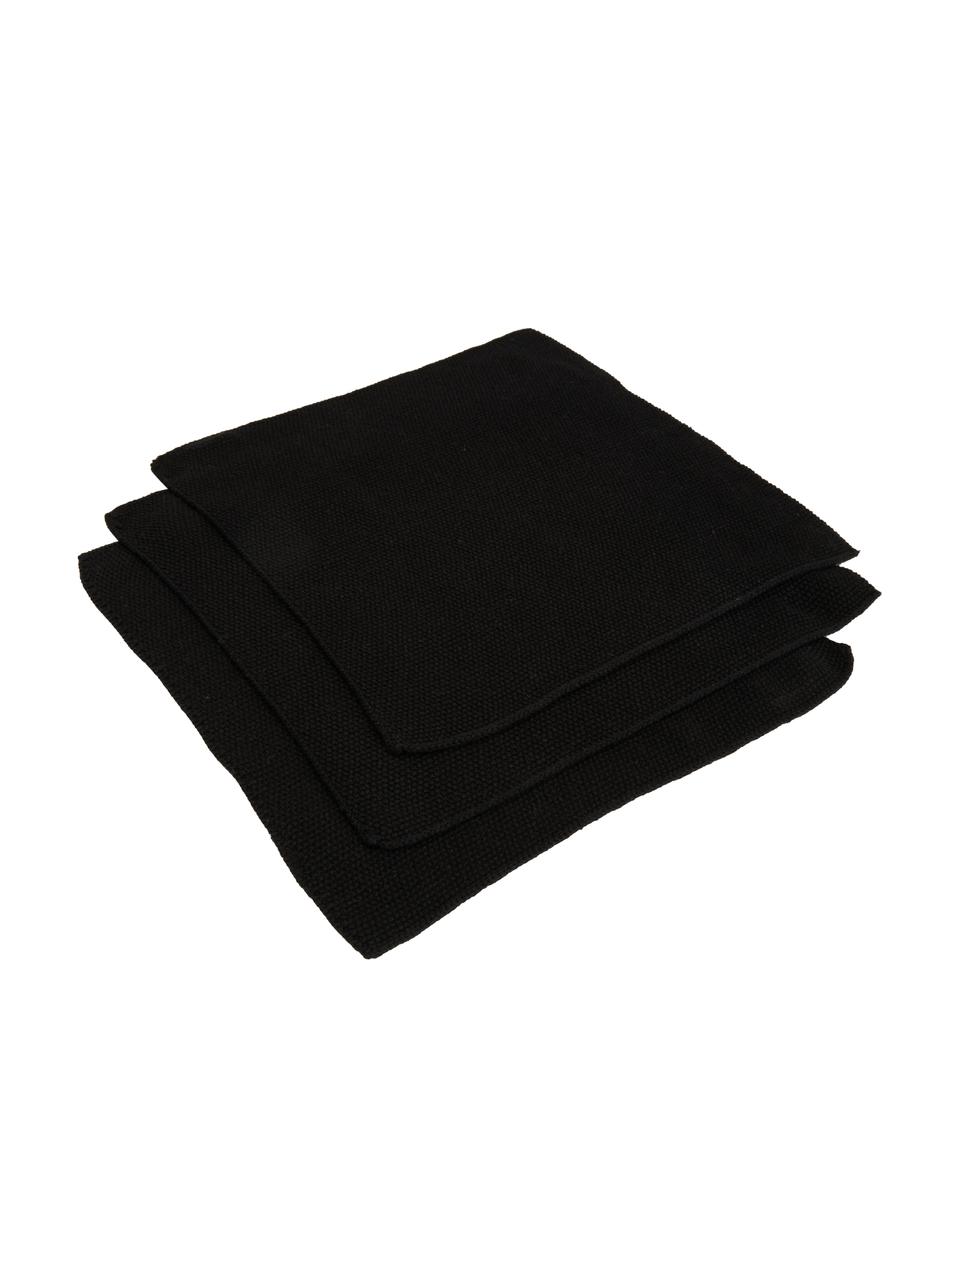 Paños de cocina de algodón Soft, 3 uds., 100% algodón, Negro, An 29 x L 30 cm